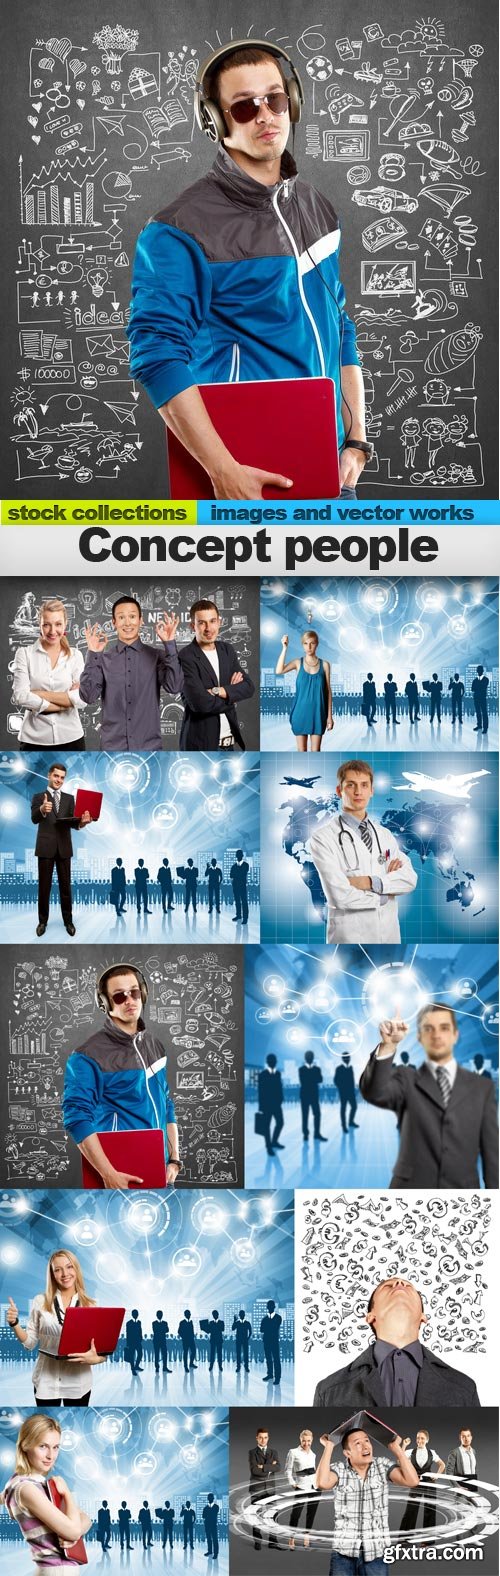 Concept people, 10 x UHQ JPEG